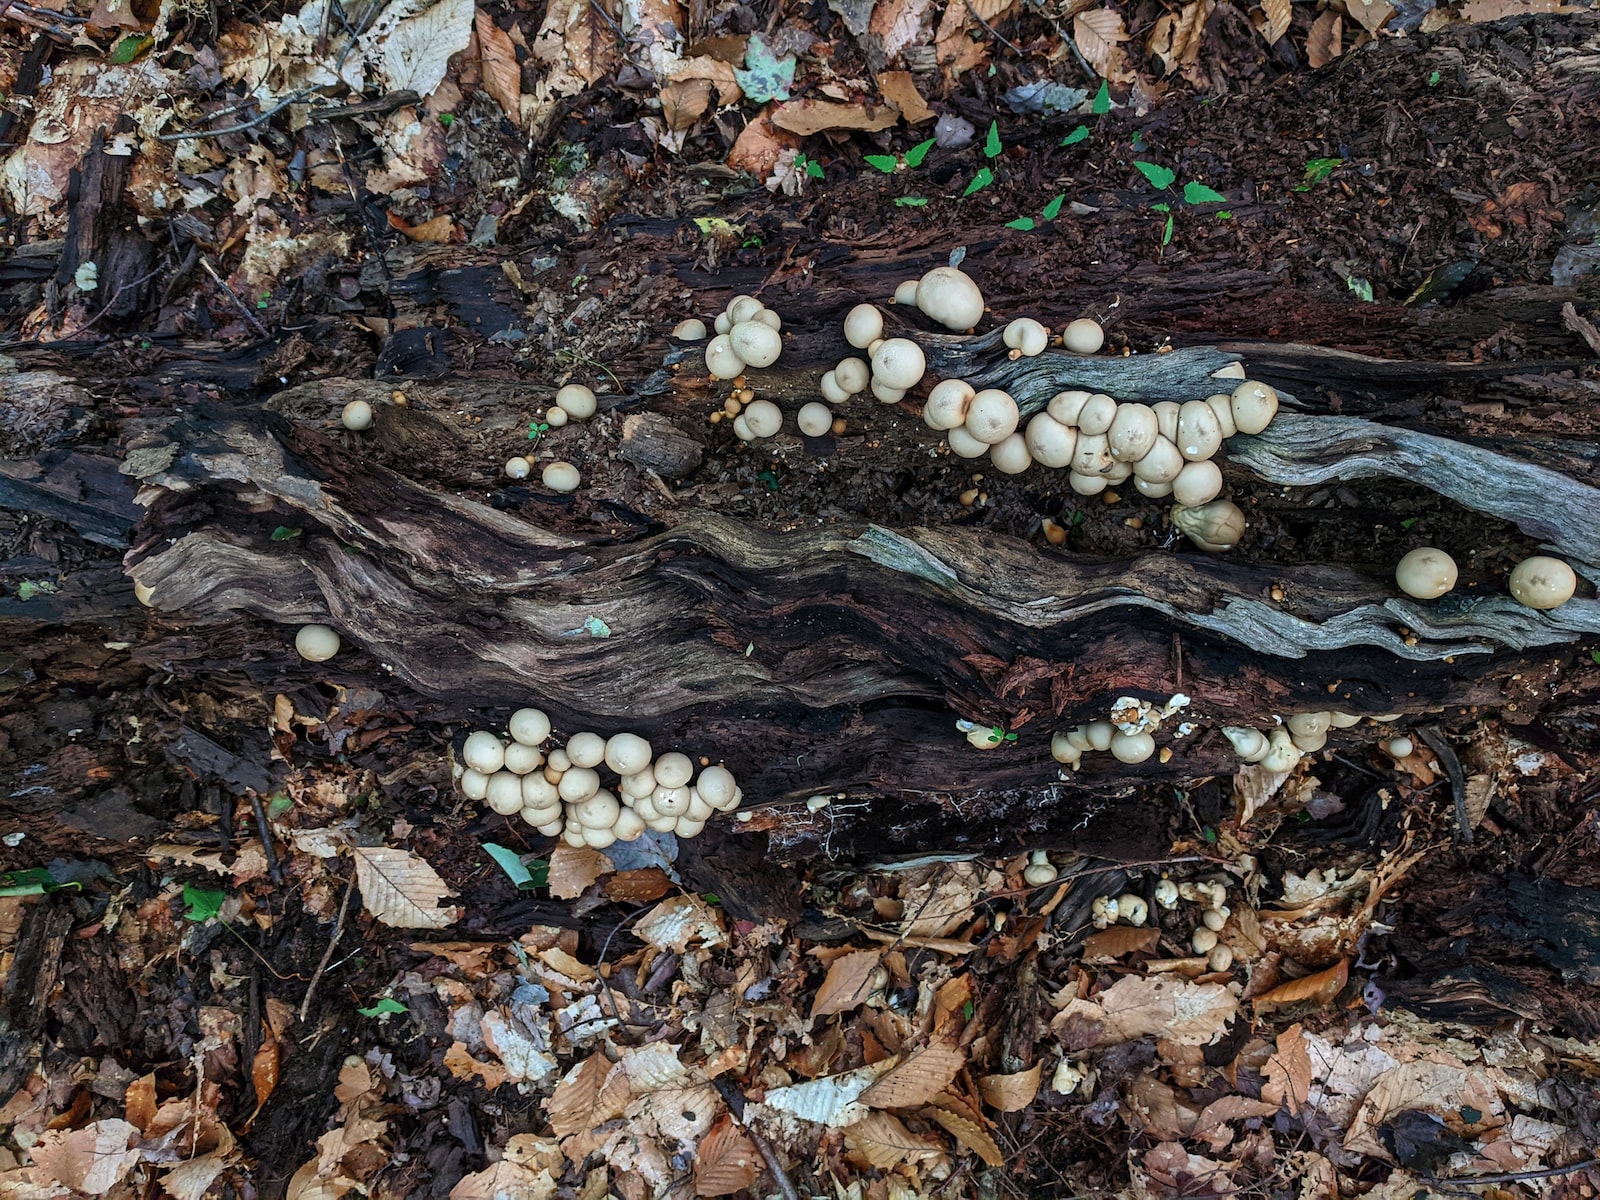 white mushrooms on brown dried leaves